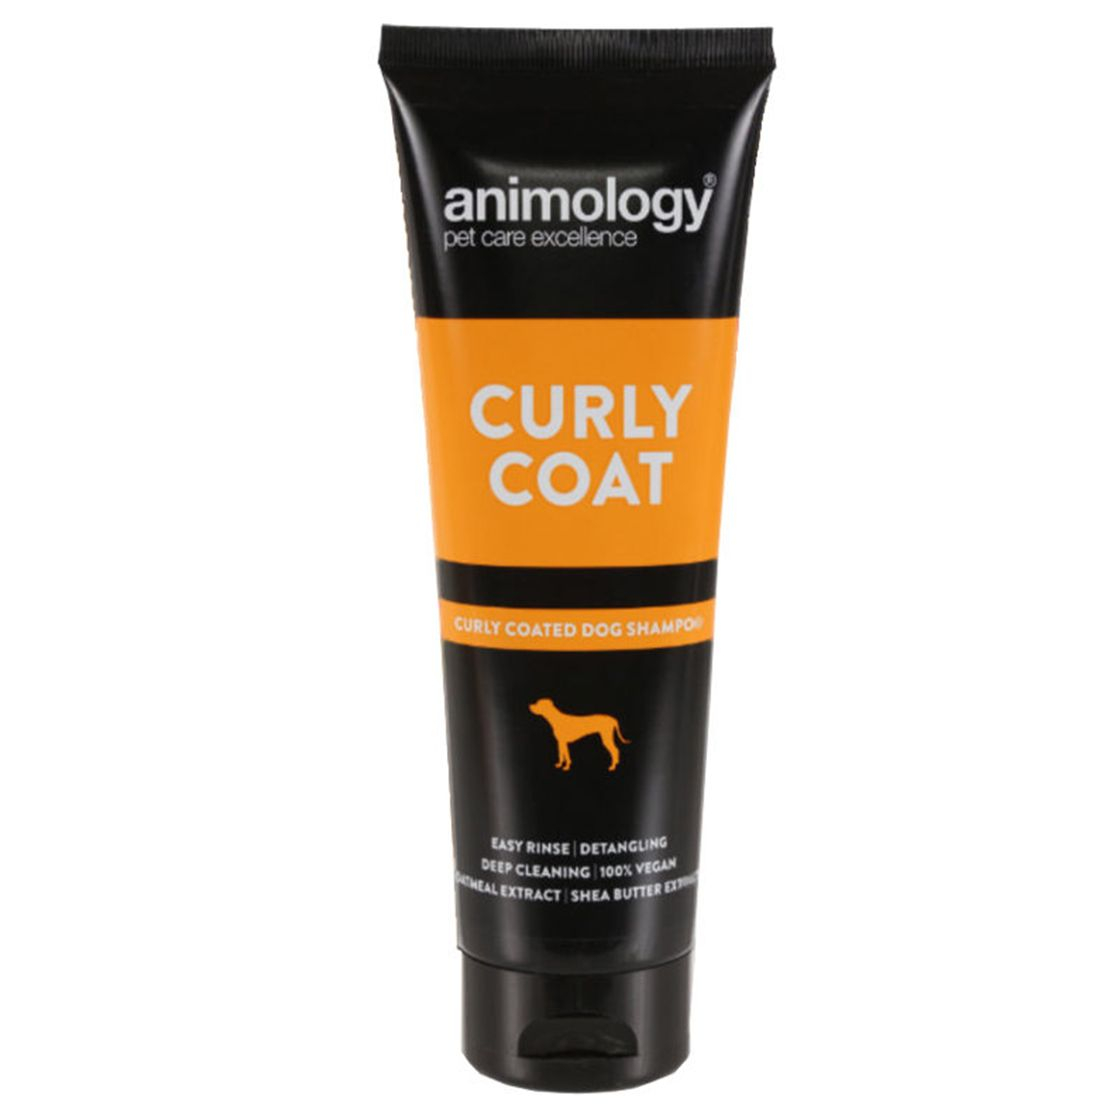 Animology Curly Coat - shampoo for curly hair 250ml